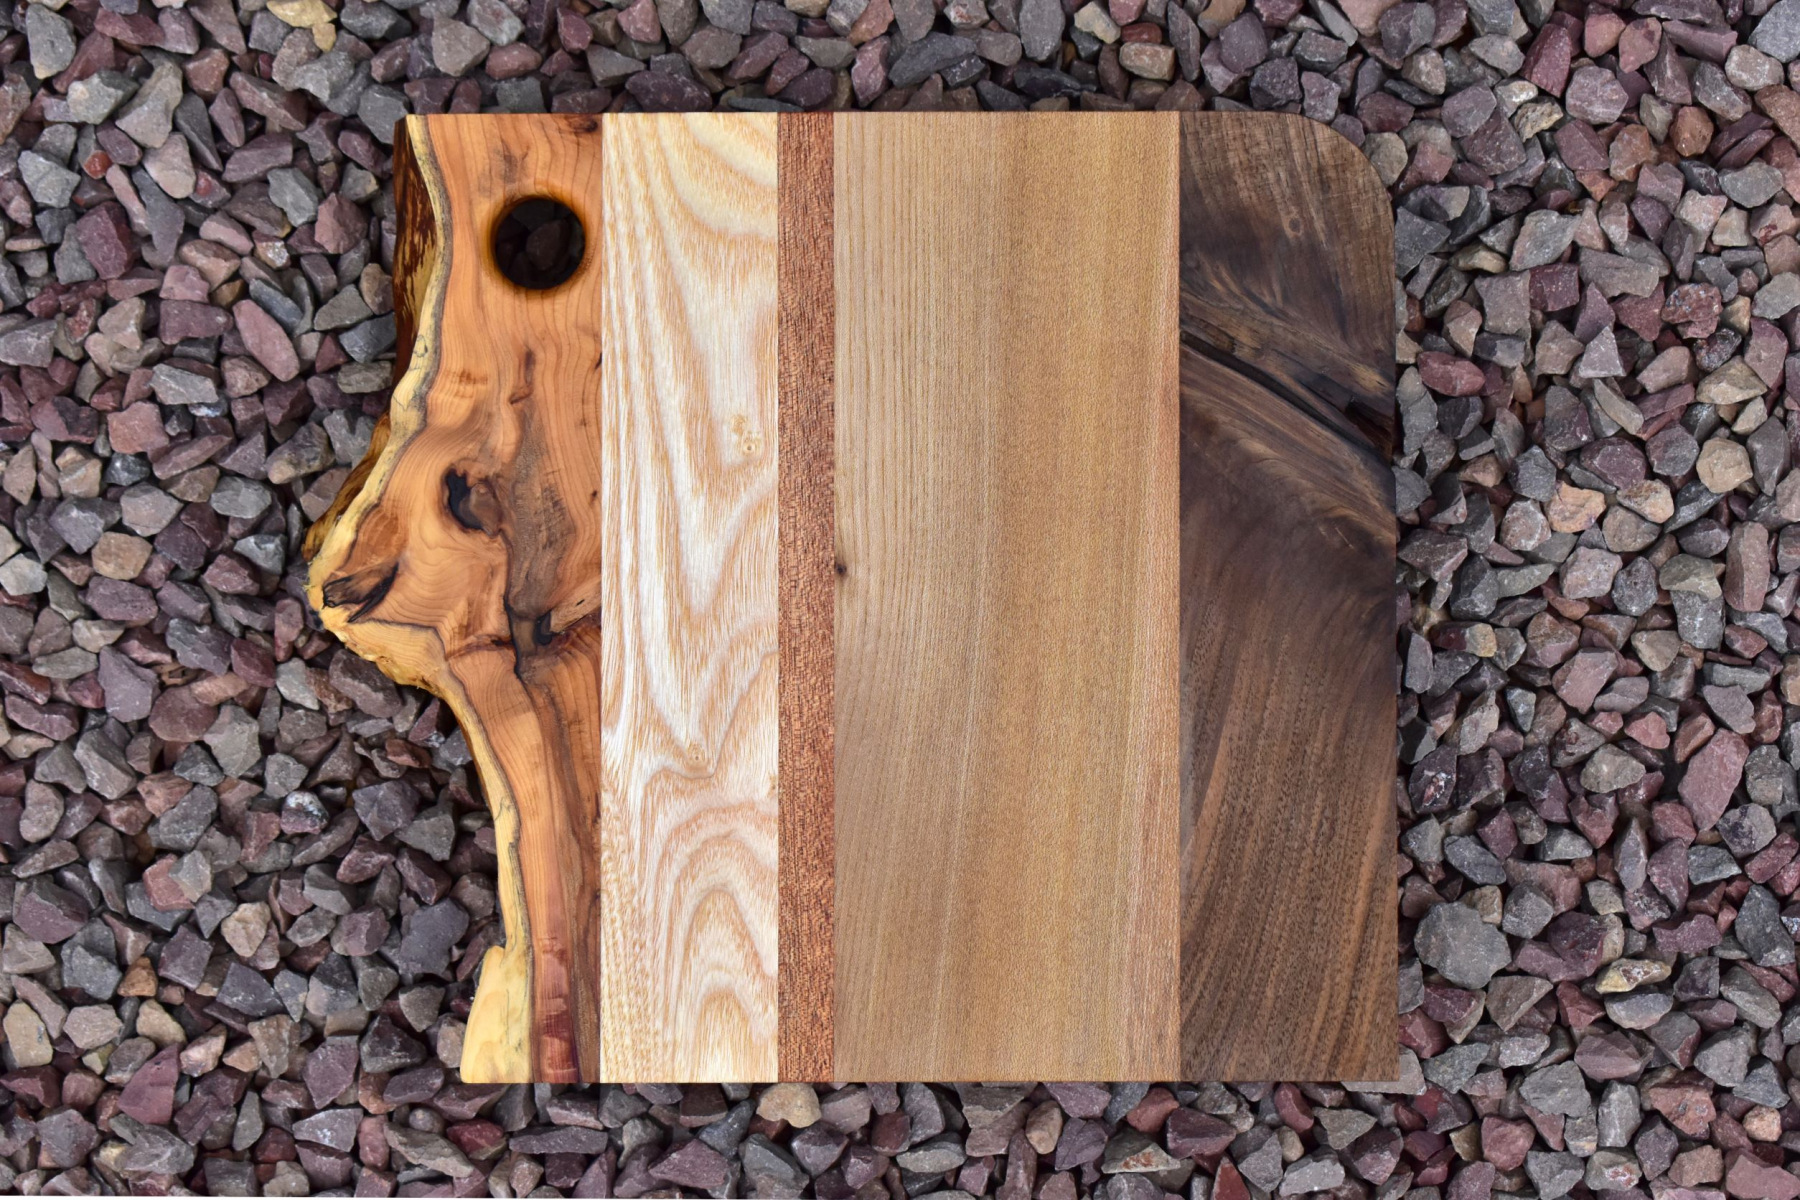 Mixed wood charcuterie board